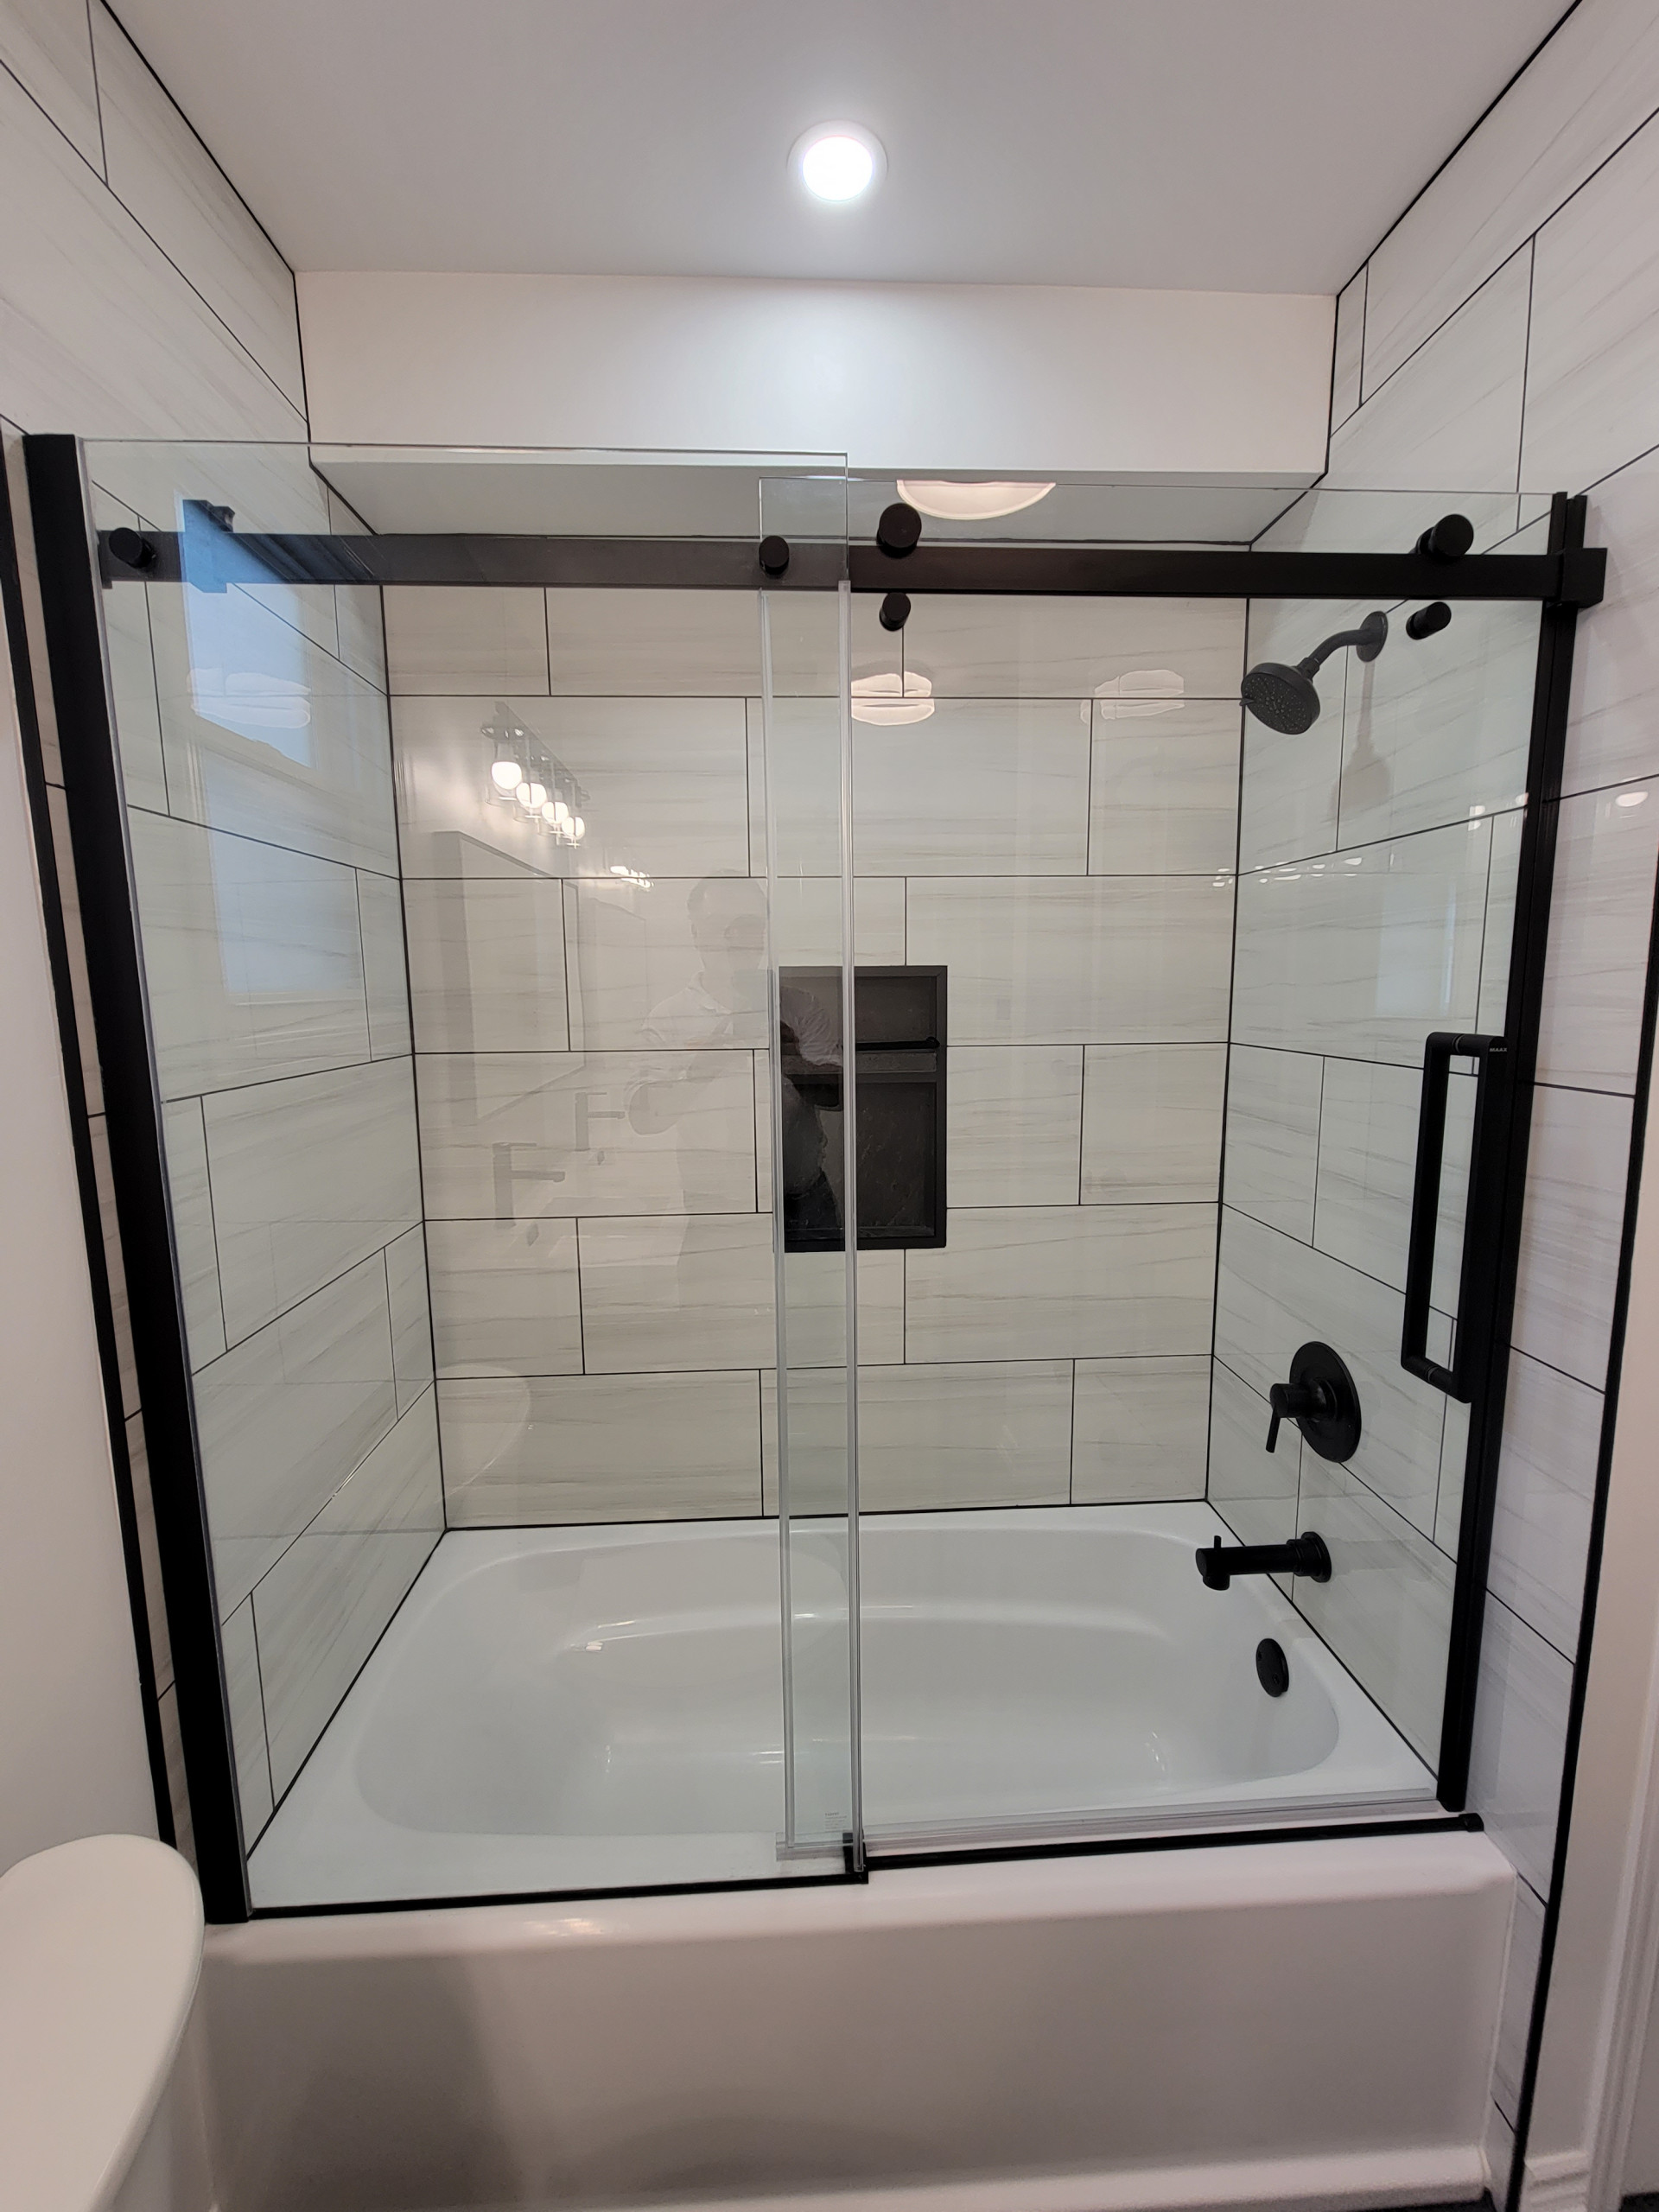 Shower with Large Rectangular Tile and Black Details